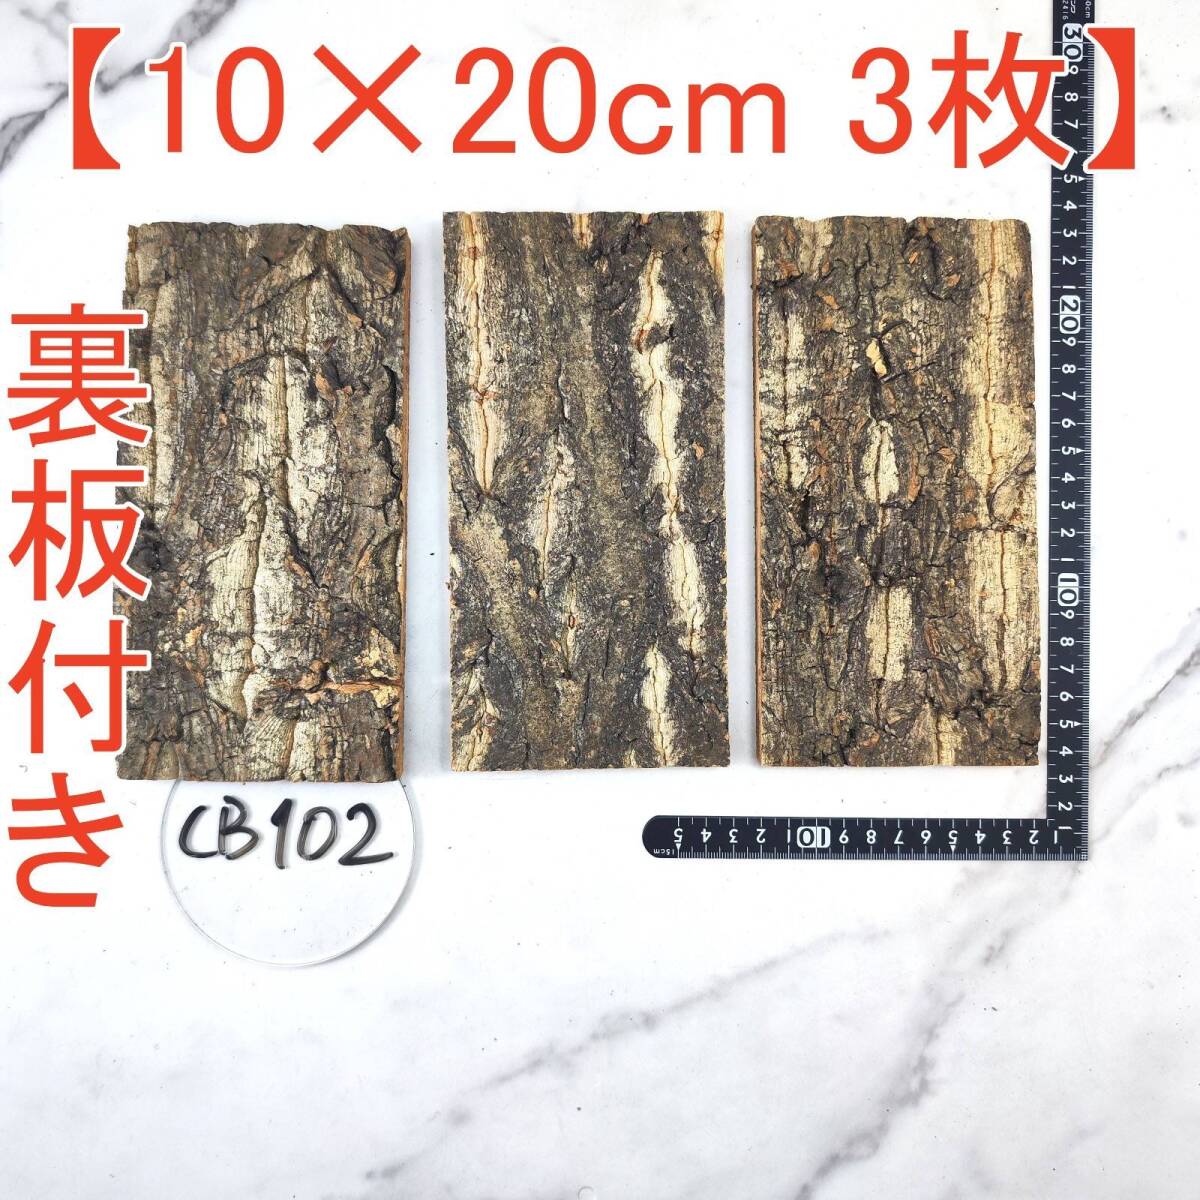 CB102[ reverse side board attaching 3 sheets 10×20cm] cork . leather cork board bar Gin cork free shipping chi Ran jia staghorn fern put on raw Ran amphibia reptiles 